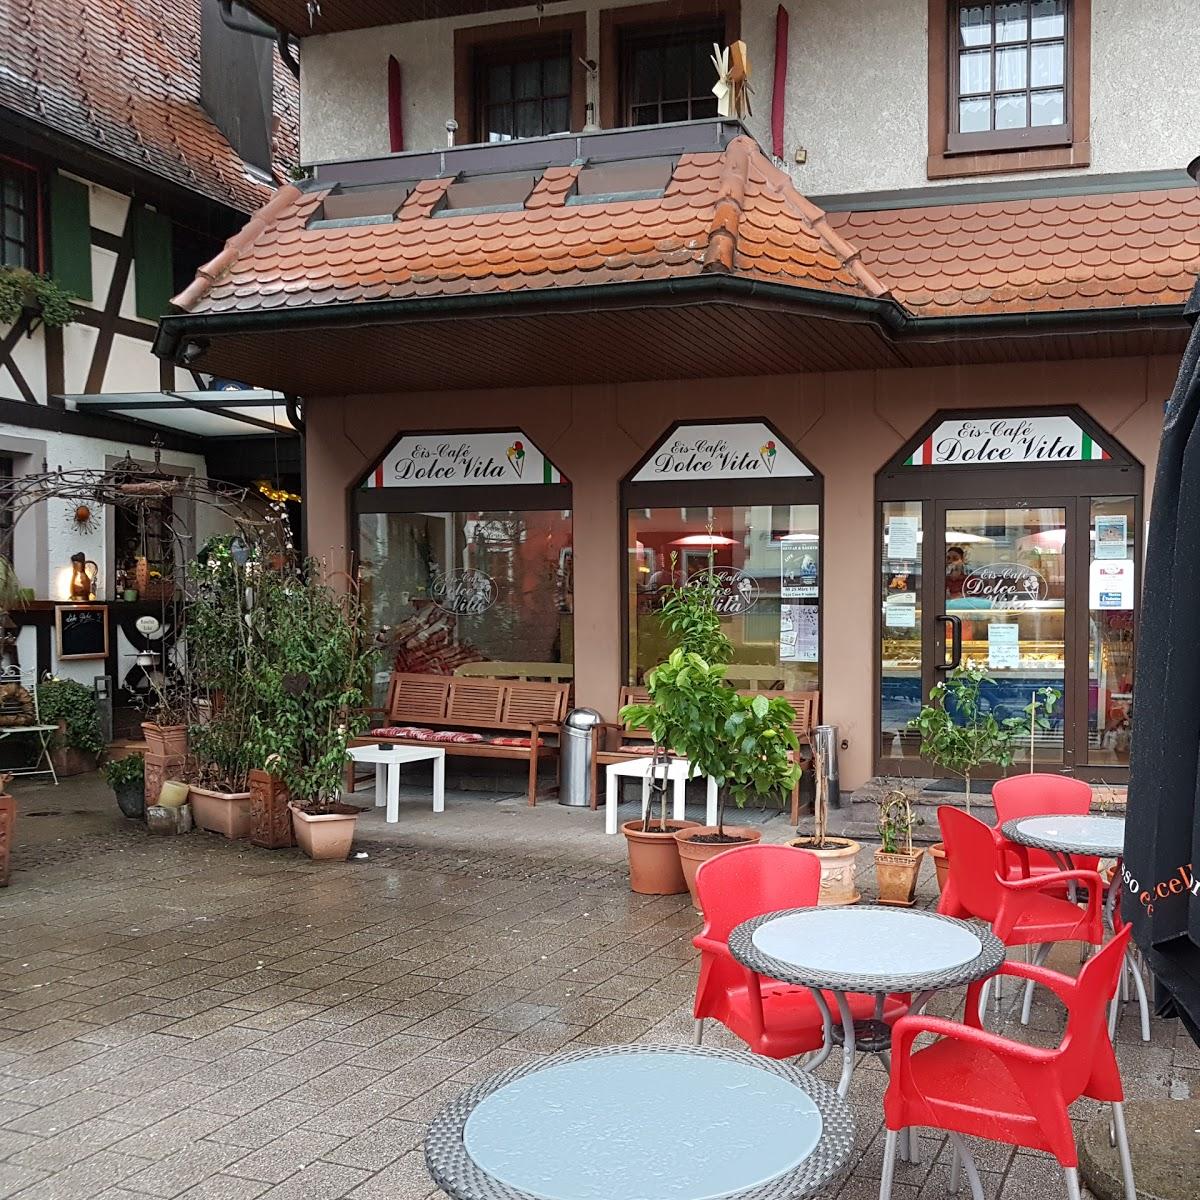 Restaurant "Eis Café Dolce Vita" in Kappelrodeck